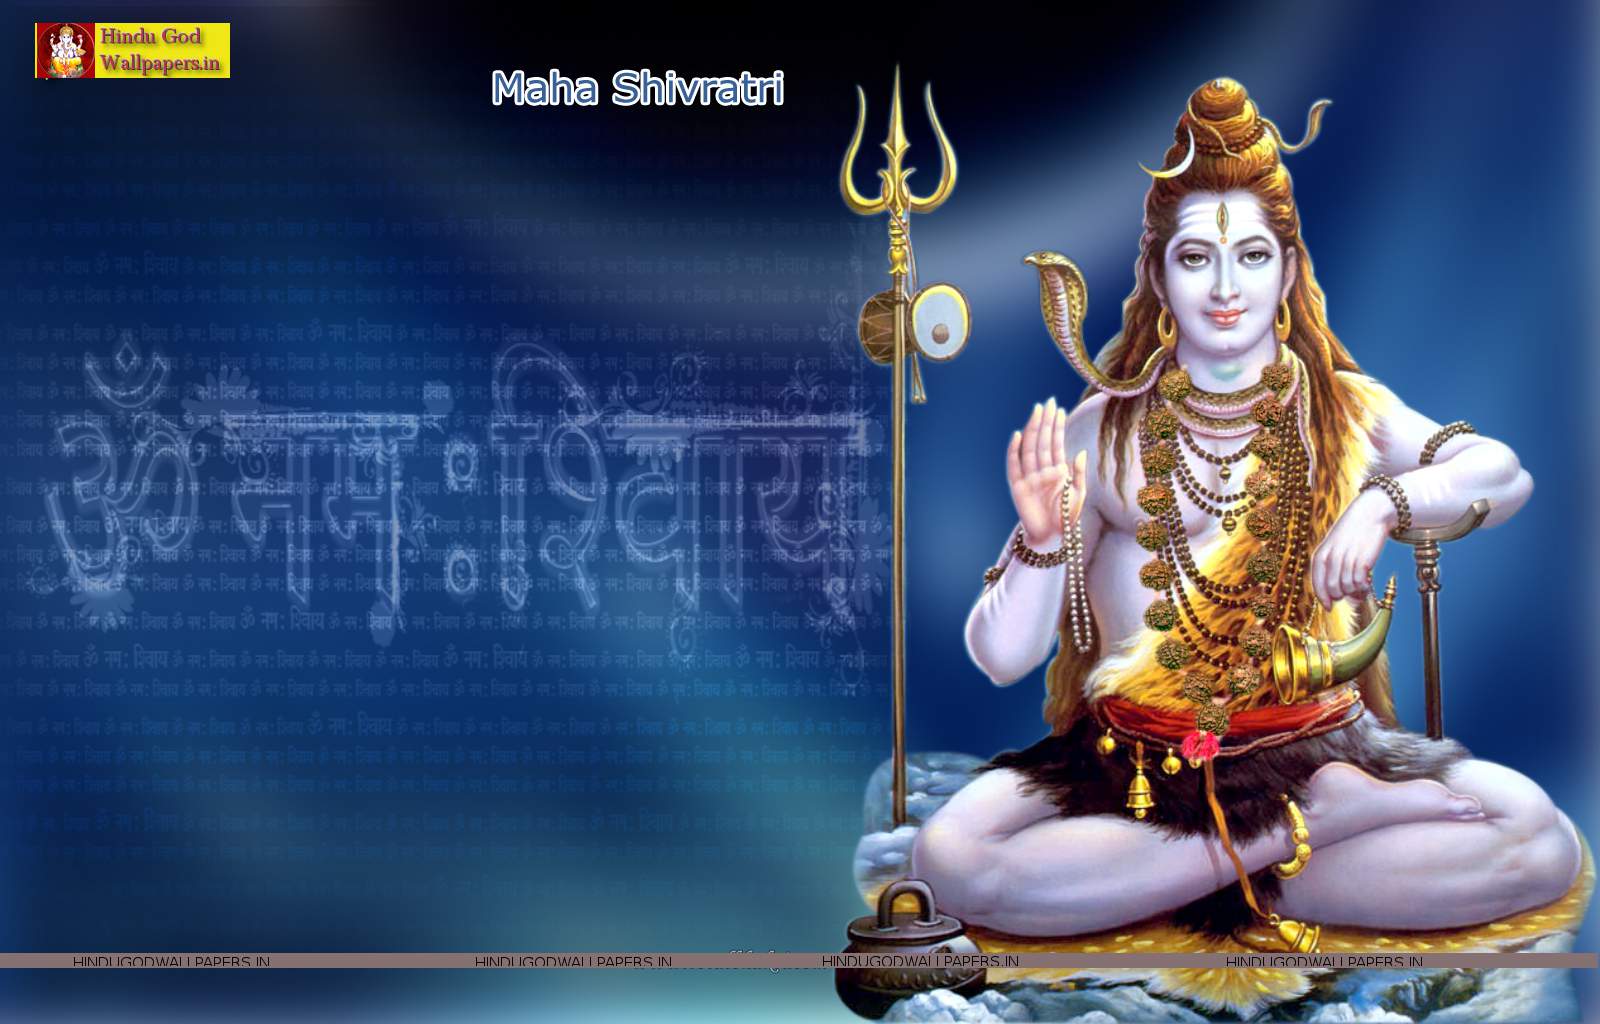 Free latest Maha Shivratri Image HD. Free download high